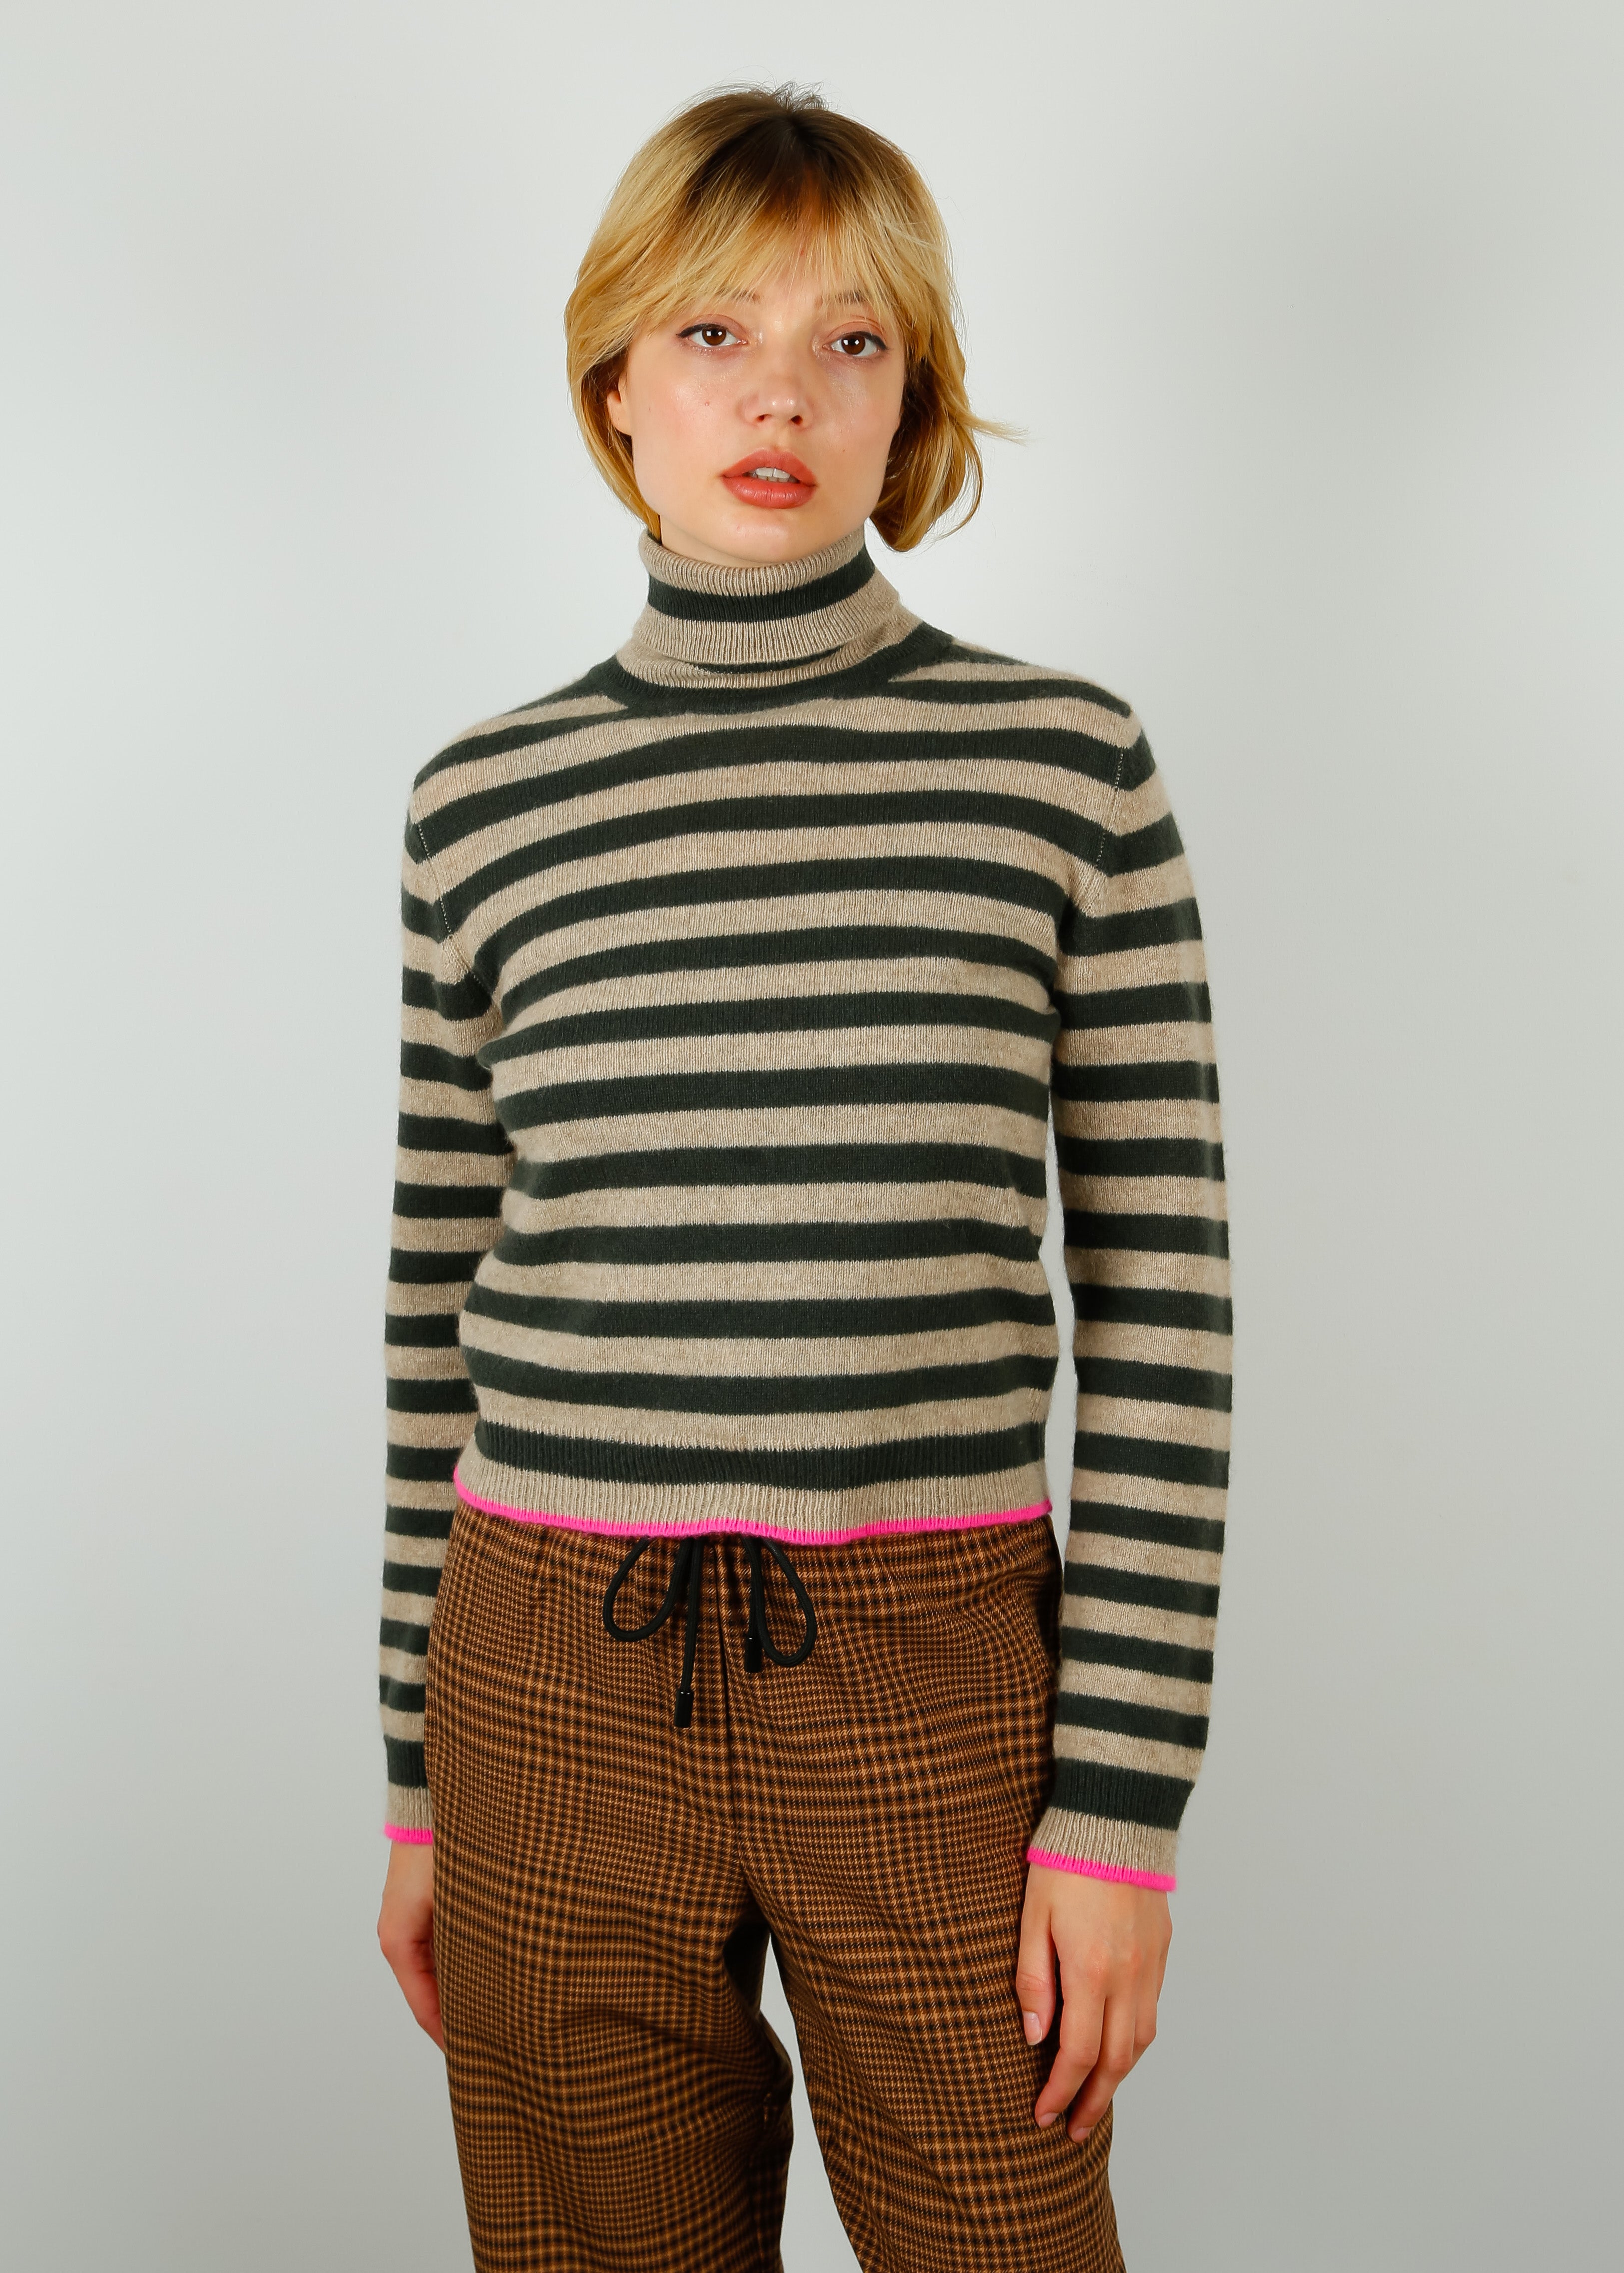 JU Little Stripe Roll Collar in Khaki, Brown, Pink